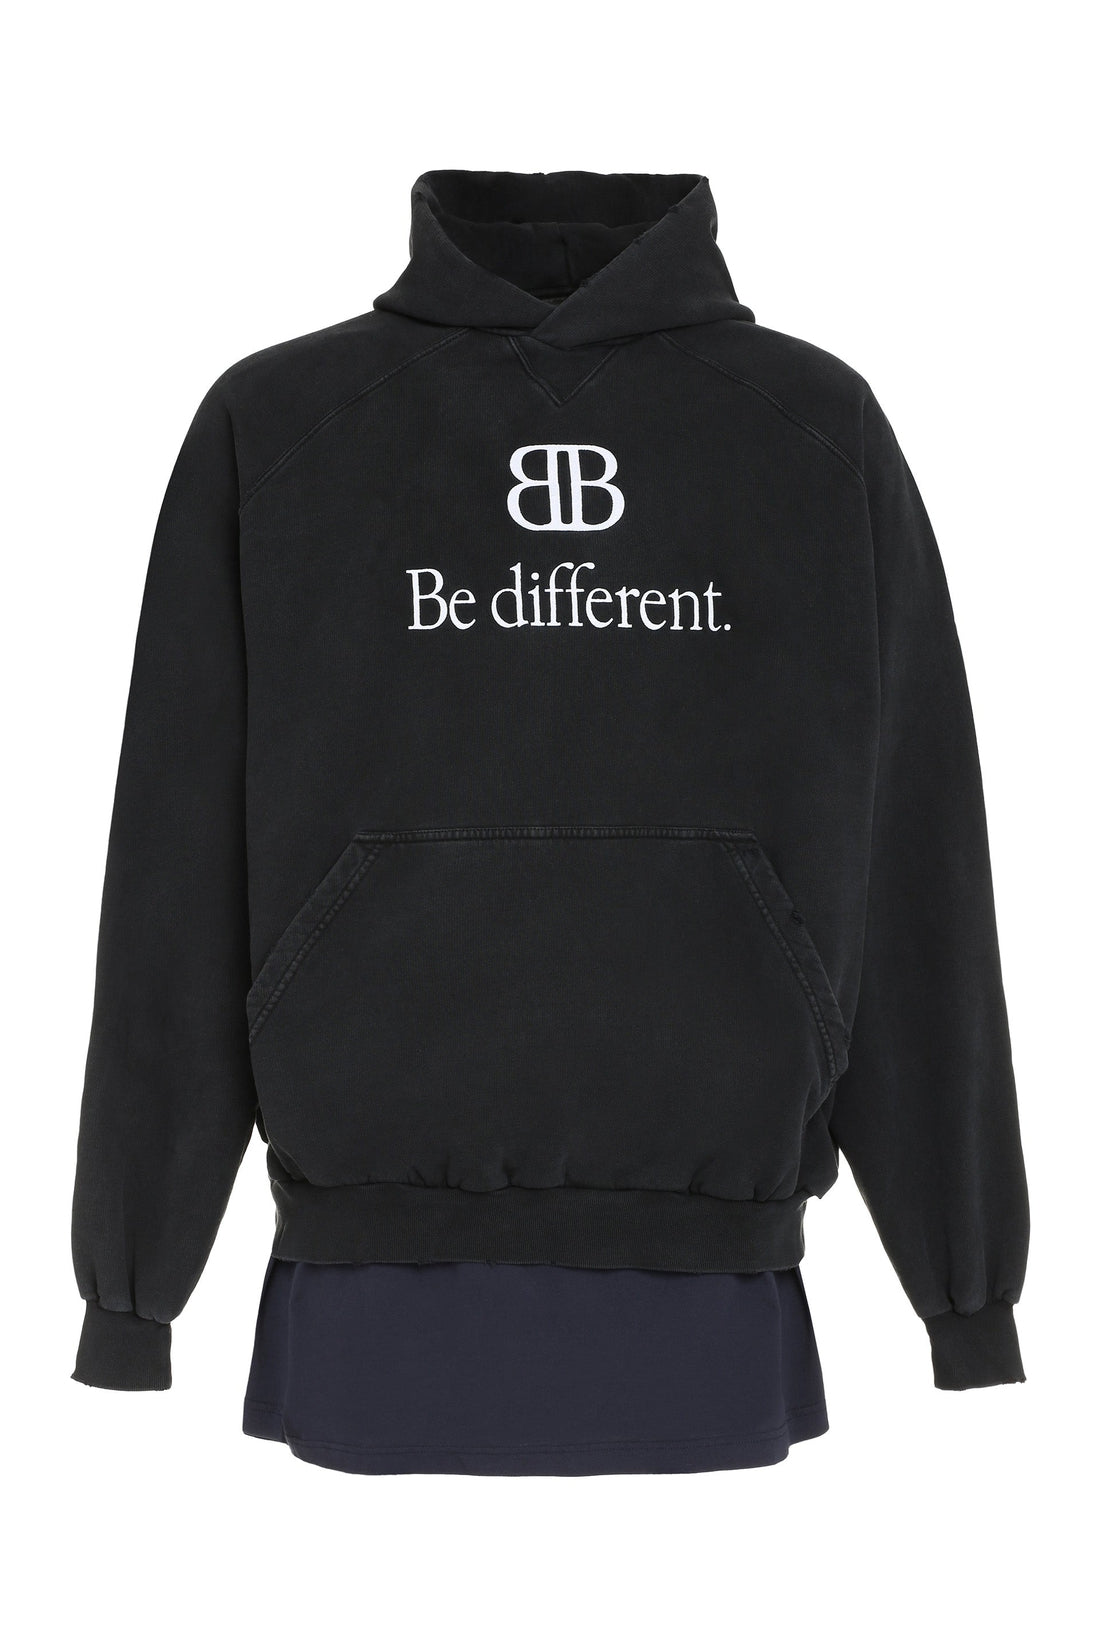 Balenciaga-OUTLET-SALE-Oversize hoodie-ARCHIVIST